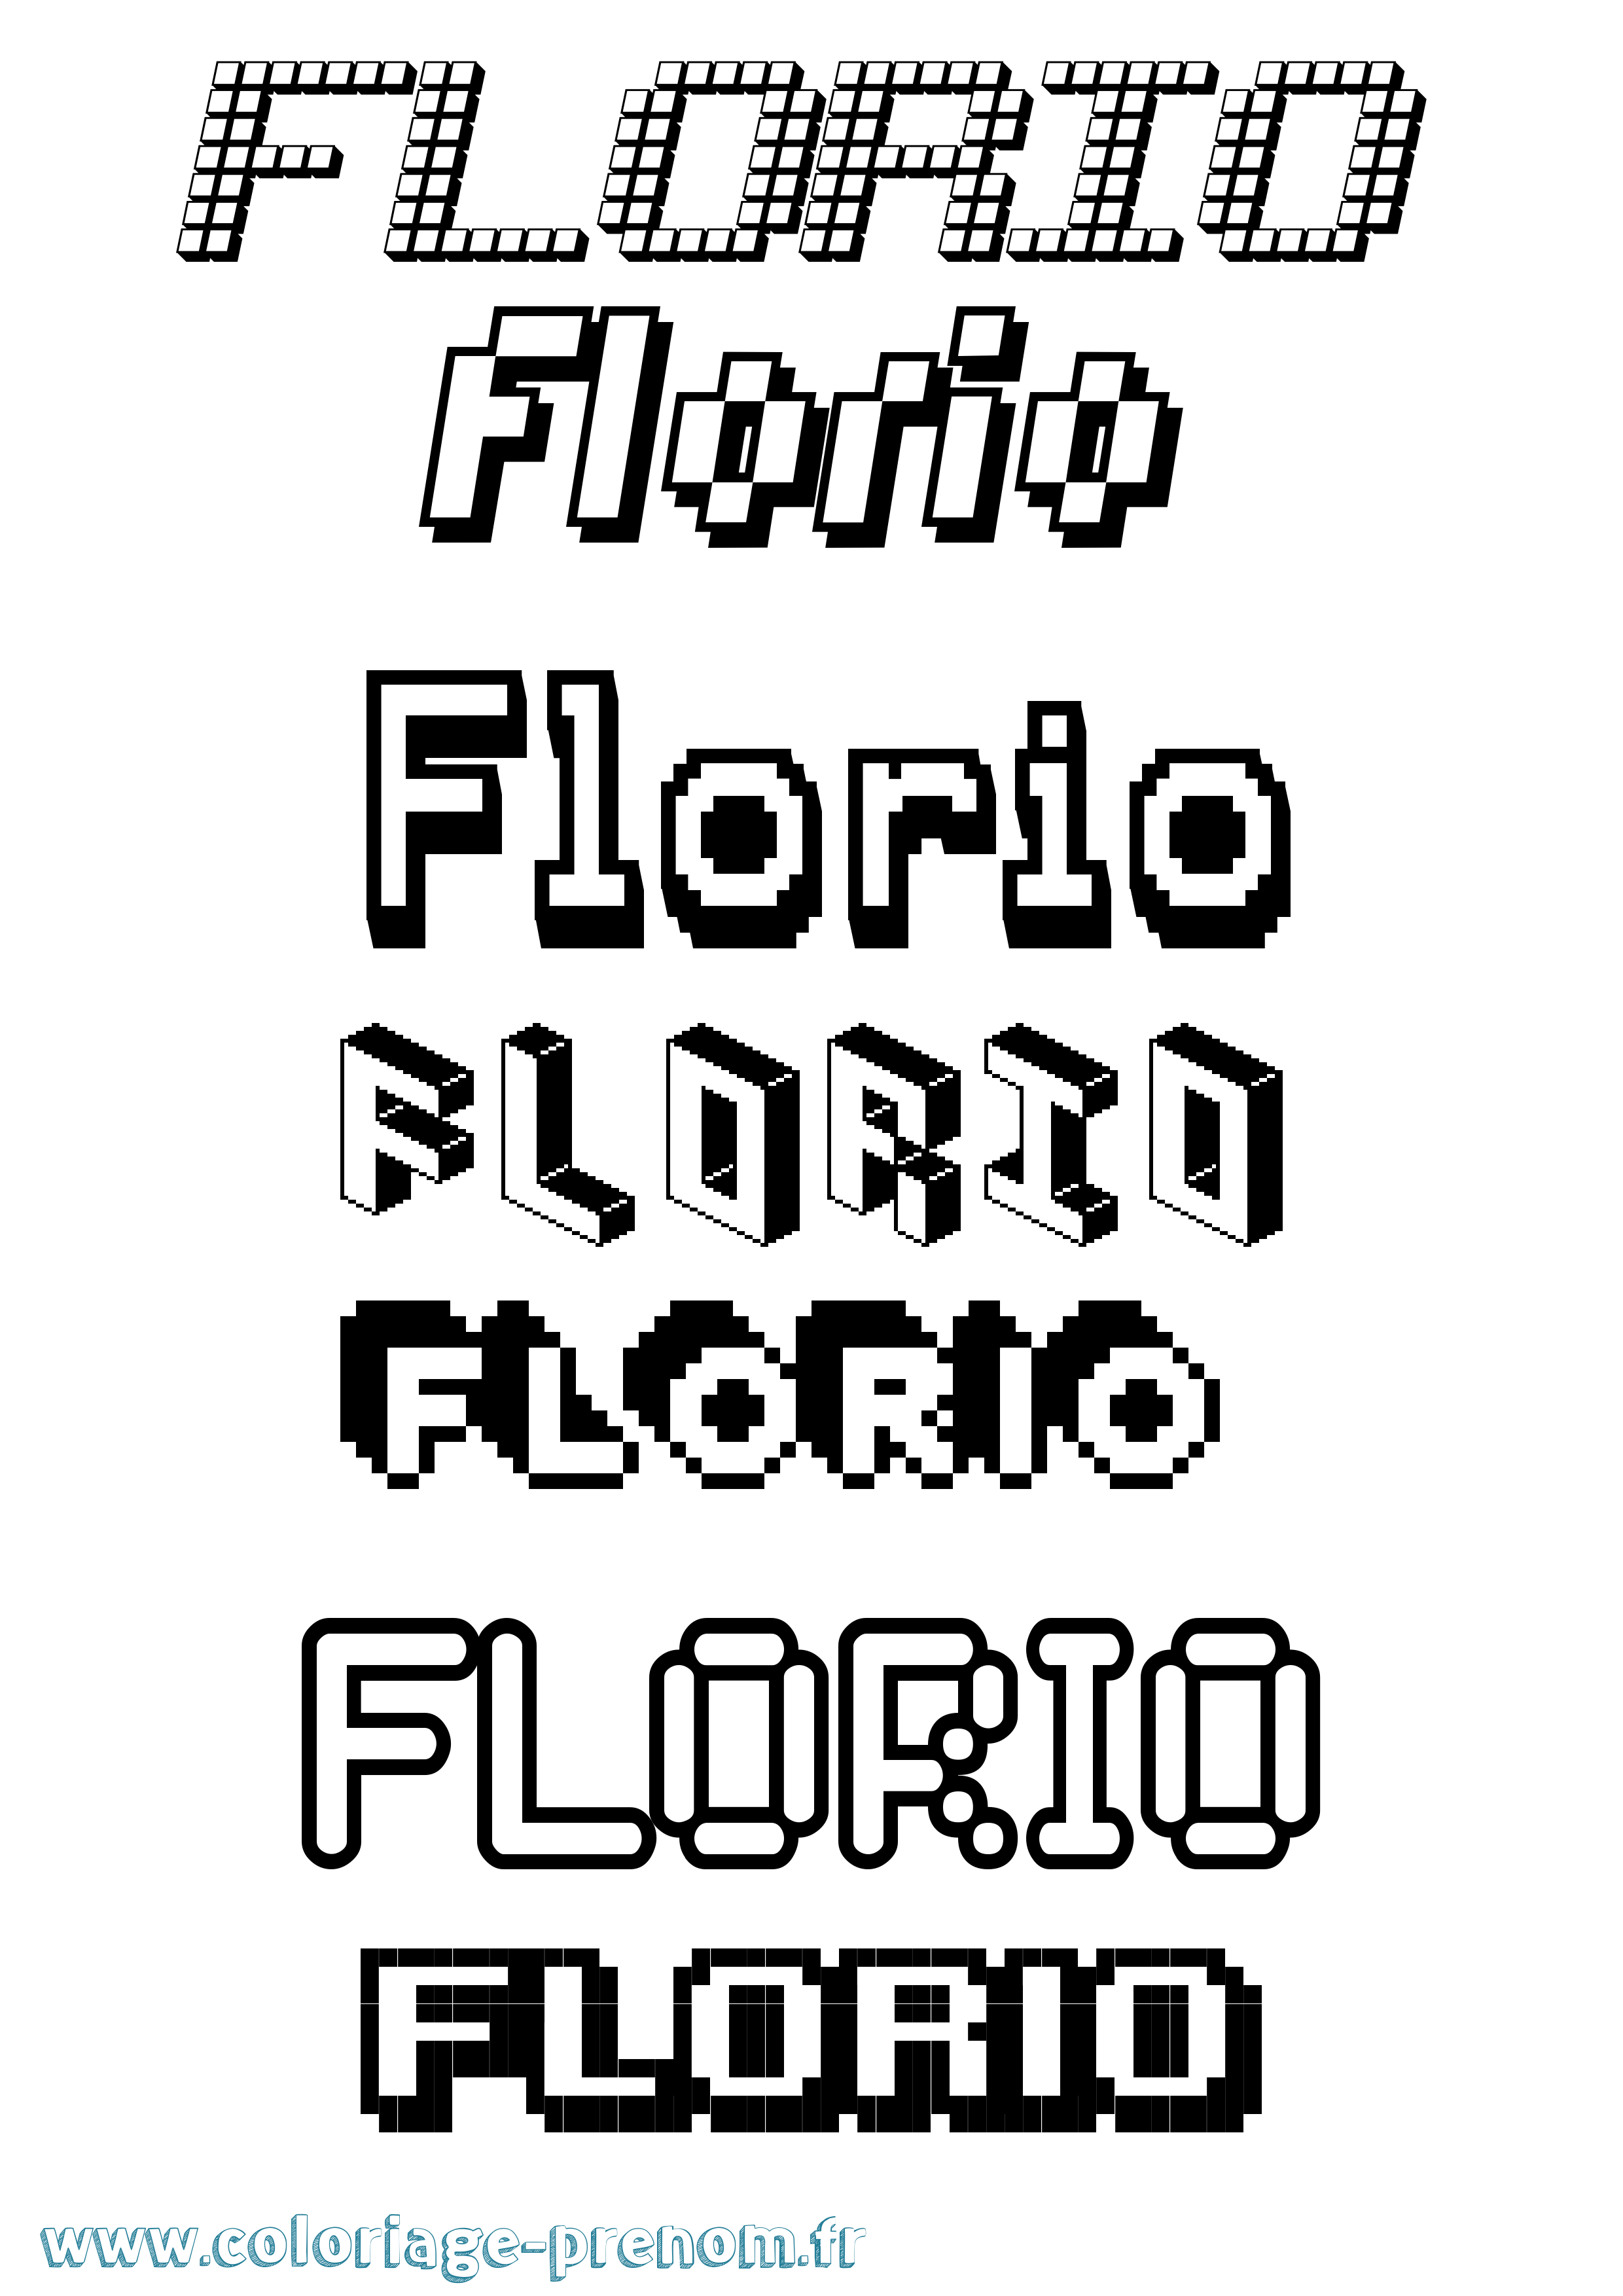 Coloriage prénom Florio Pixel